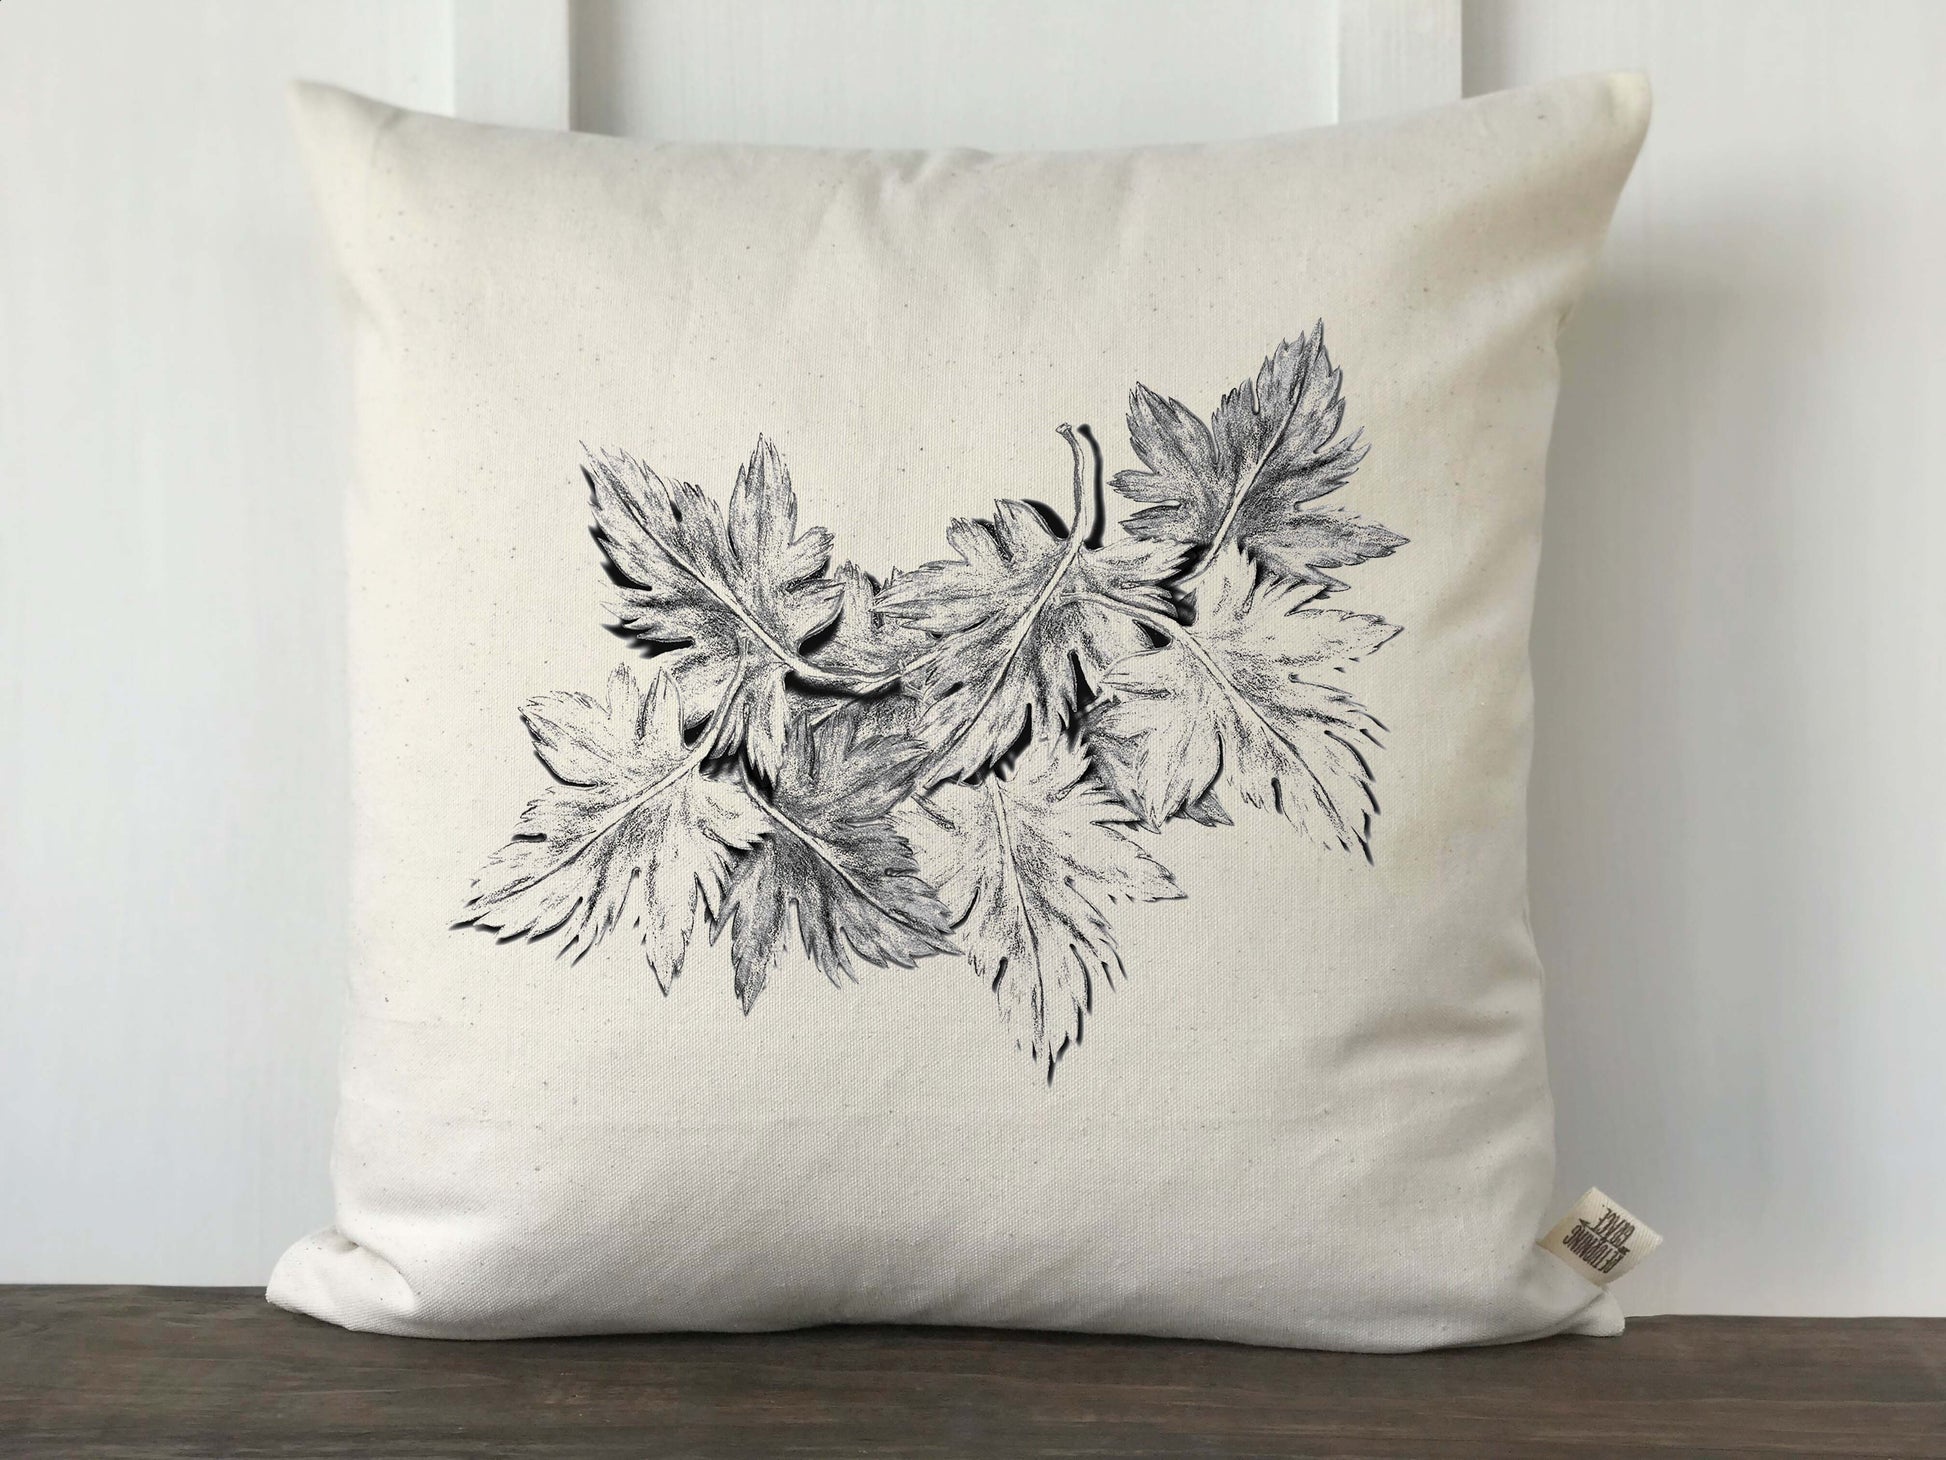 Leaves Original Art Pillow Cover - Returning Grace Designs